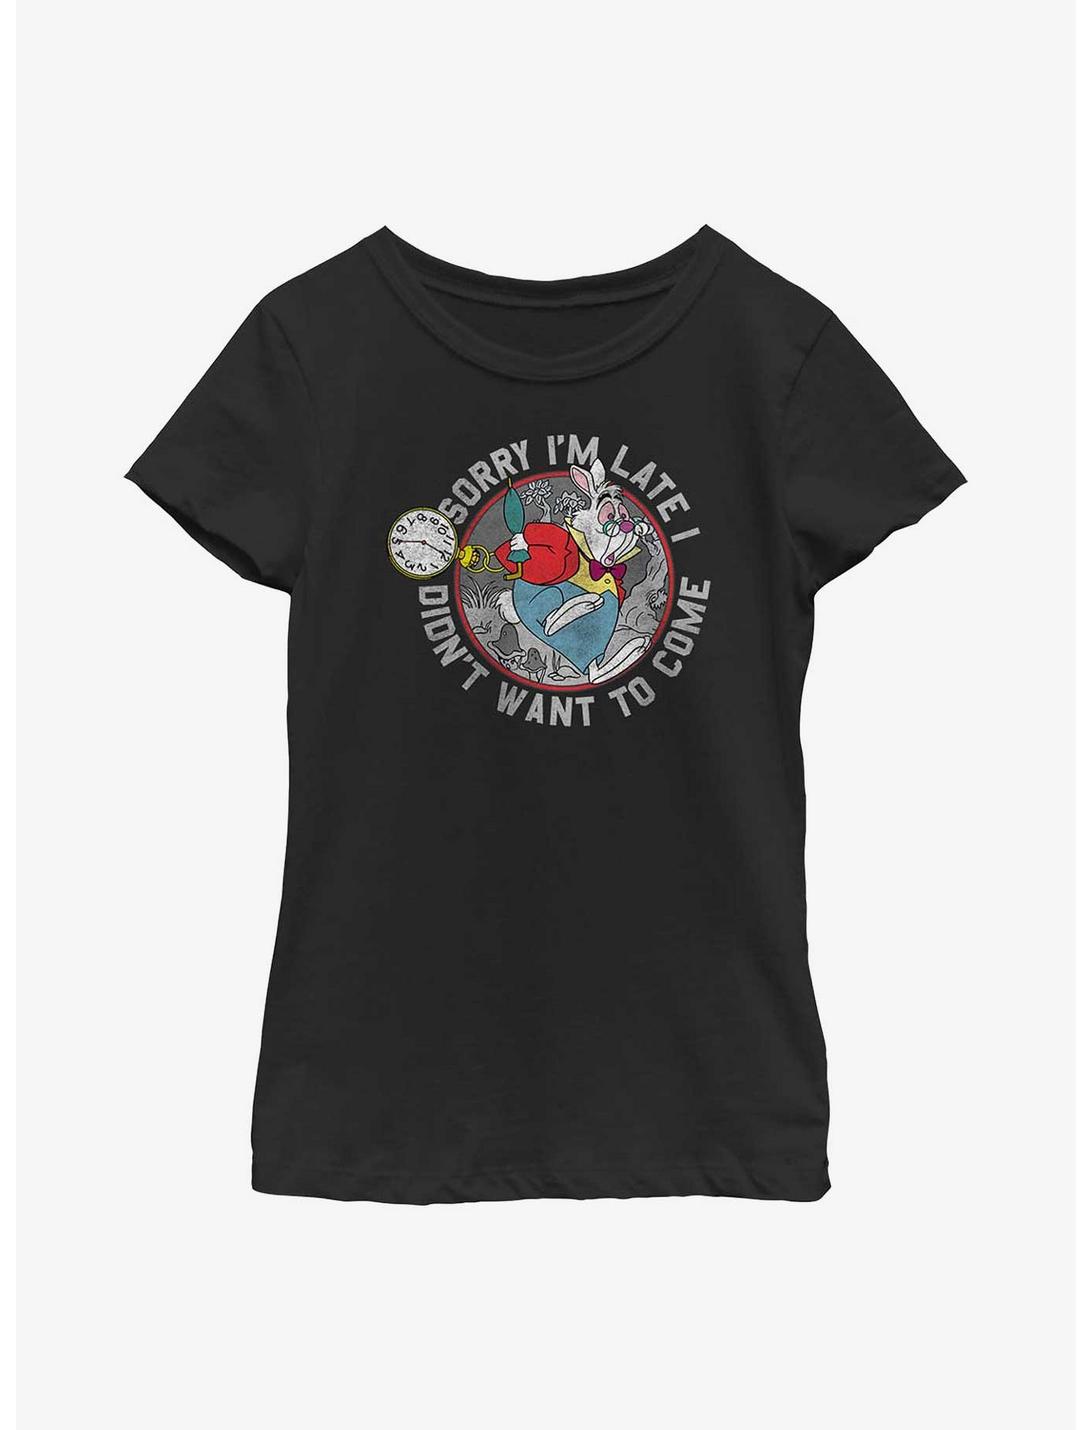 Disney Alice In Wonderland Late White Rabbit Youth Girls T-Shirt, BLACK, hi-res